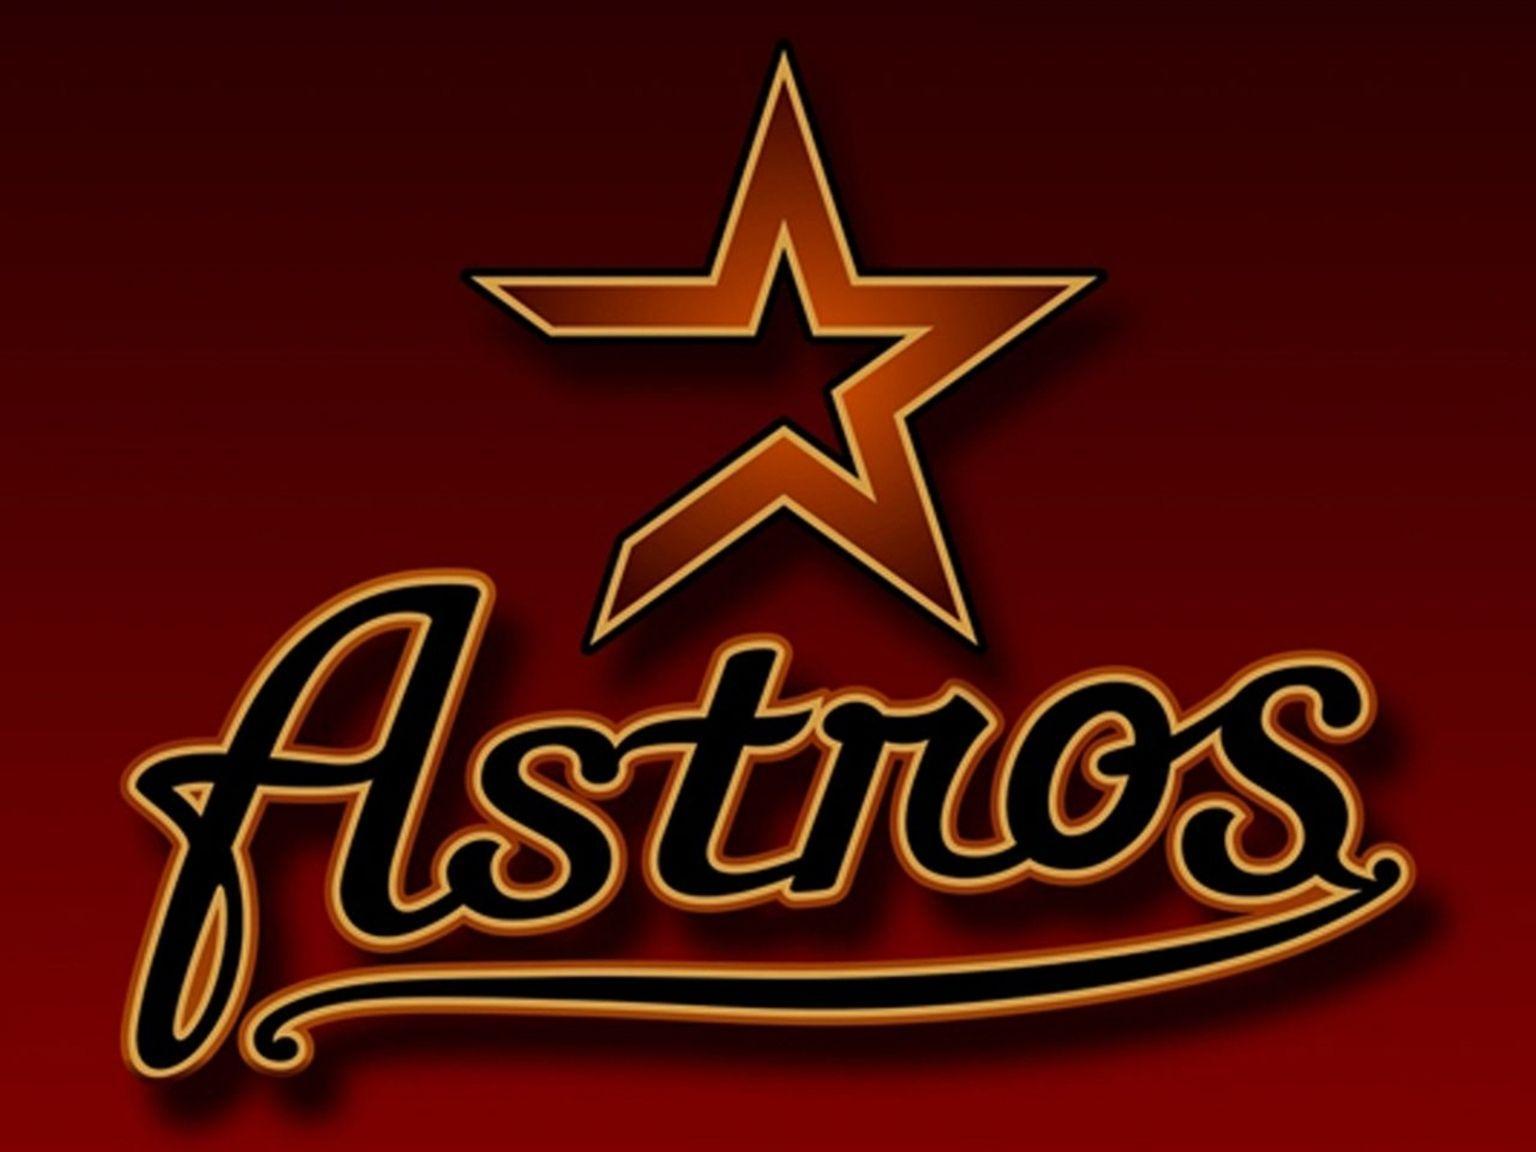 Houston Astros Wallpaper Mlb with Houston Astros Wallpaper